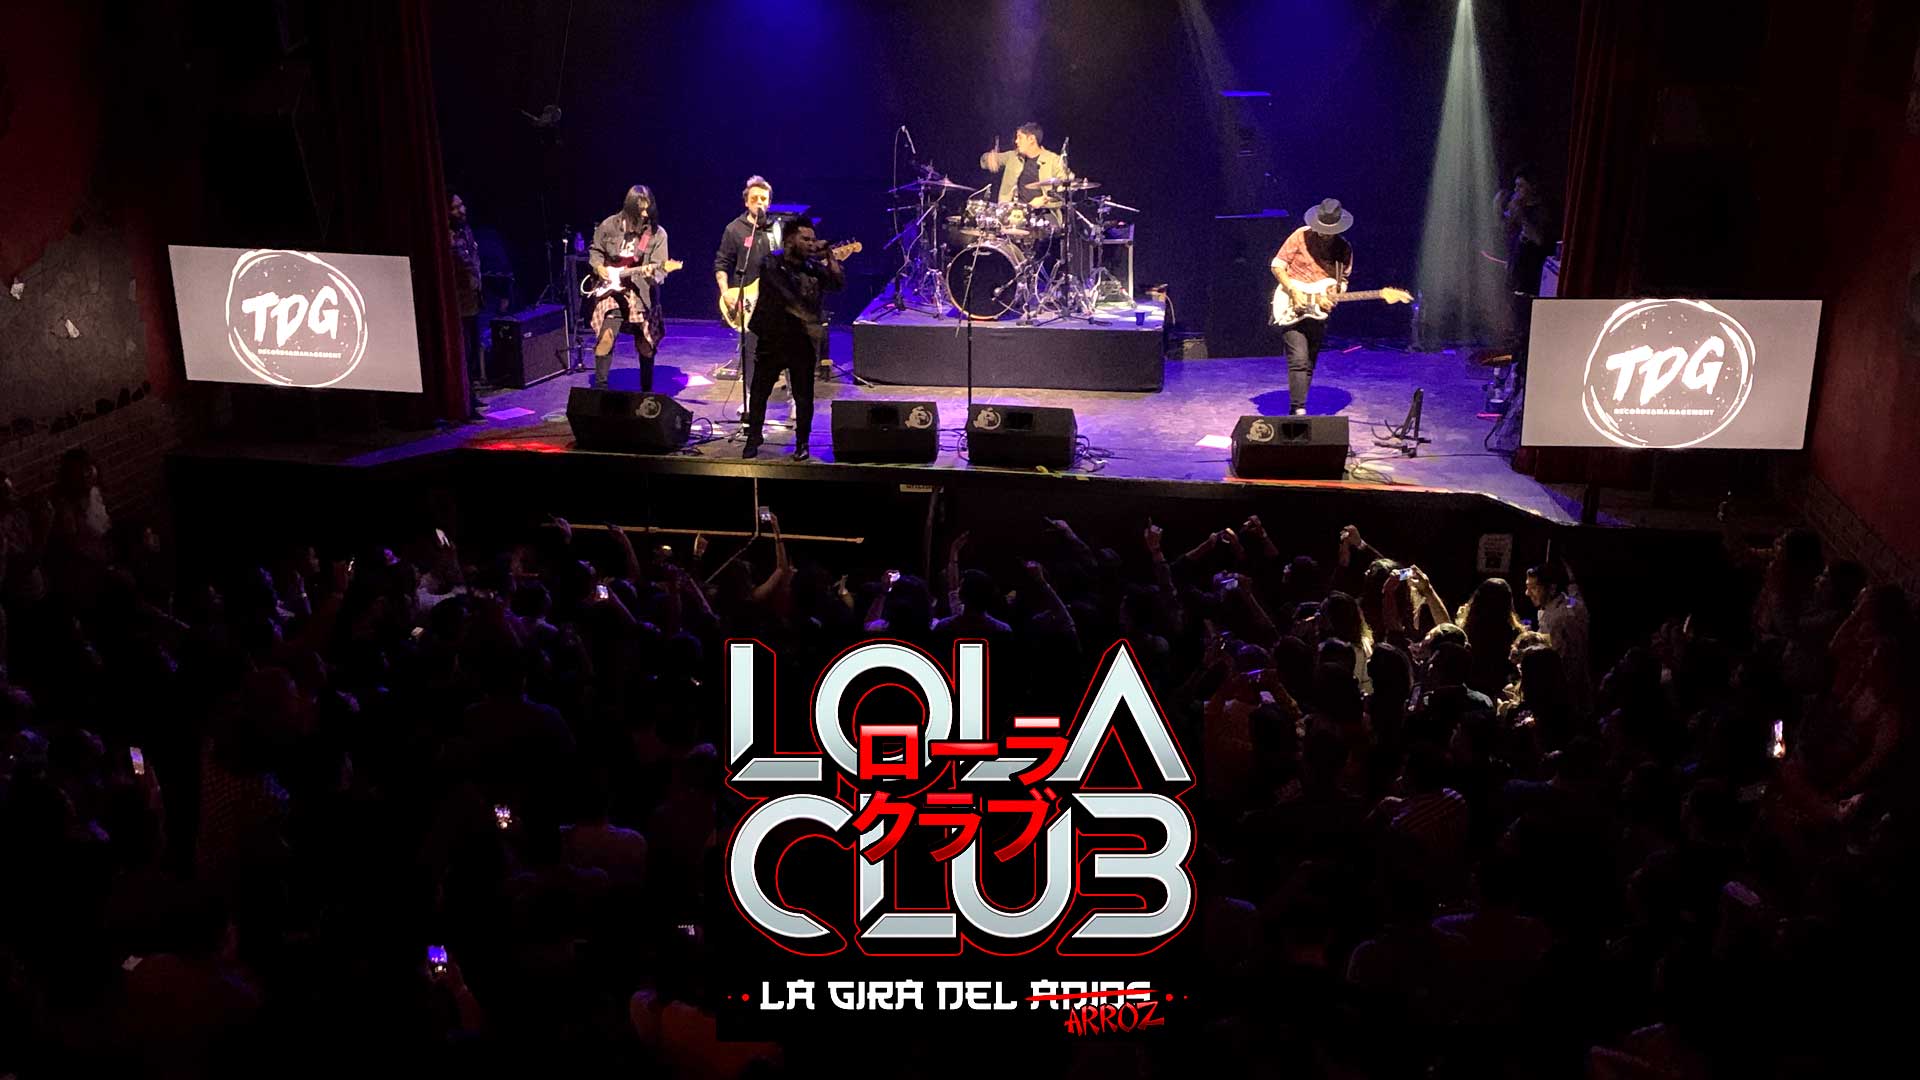 Lola Club presentó: «La gira del adiós arroz” en Monterrey